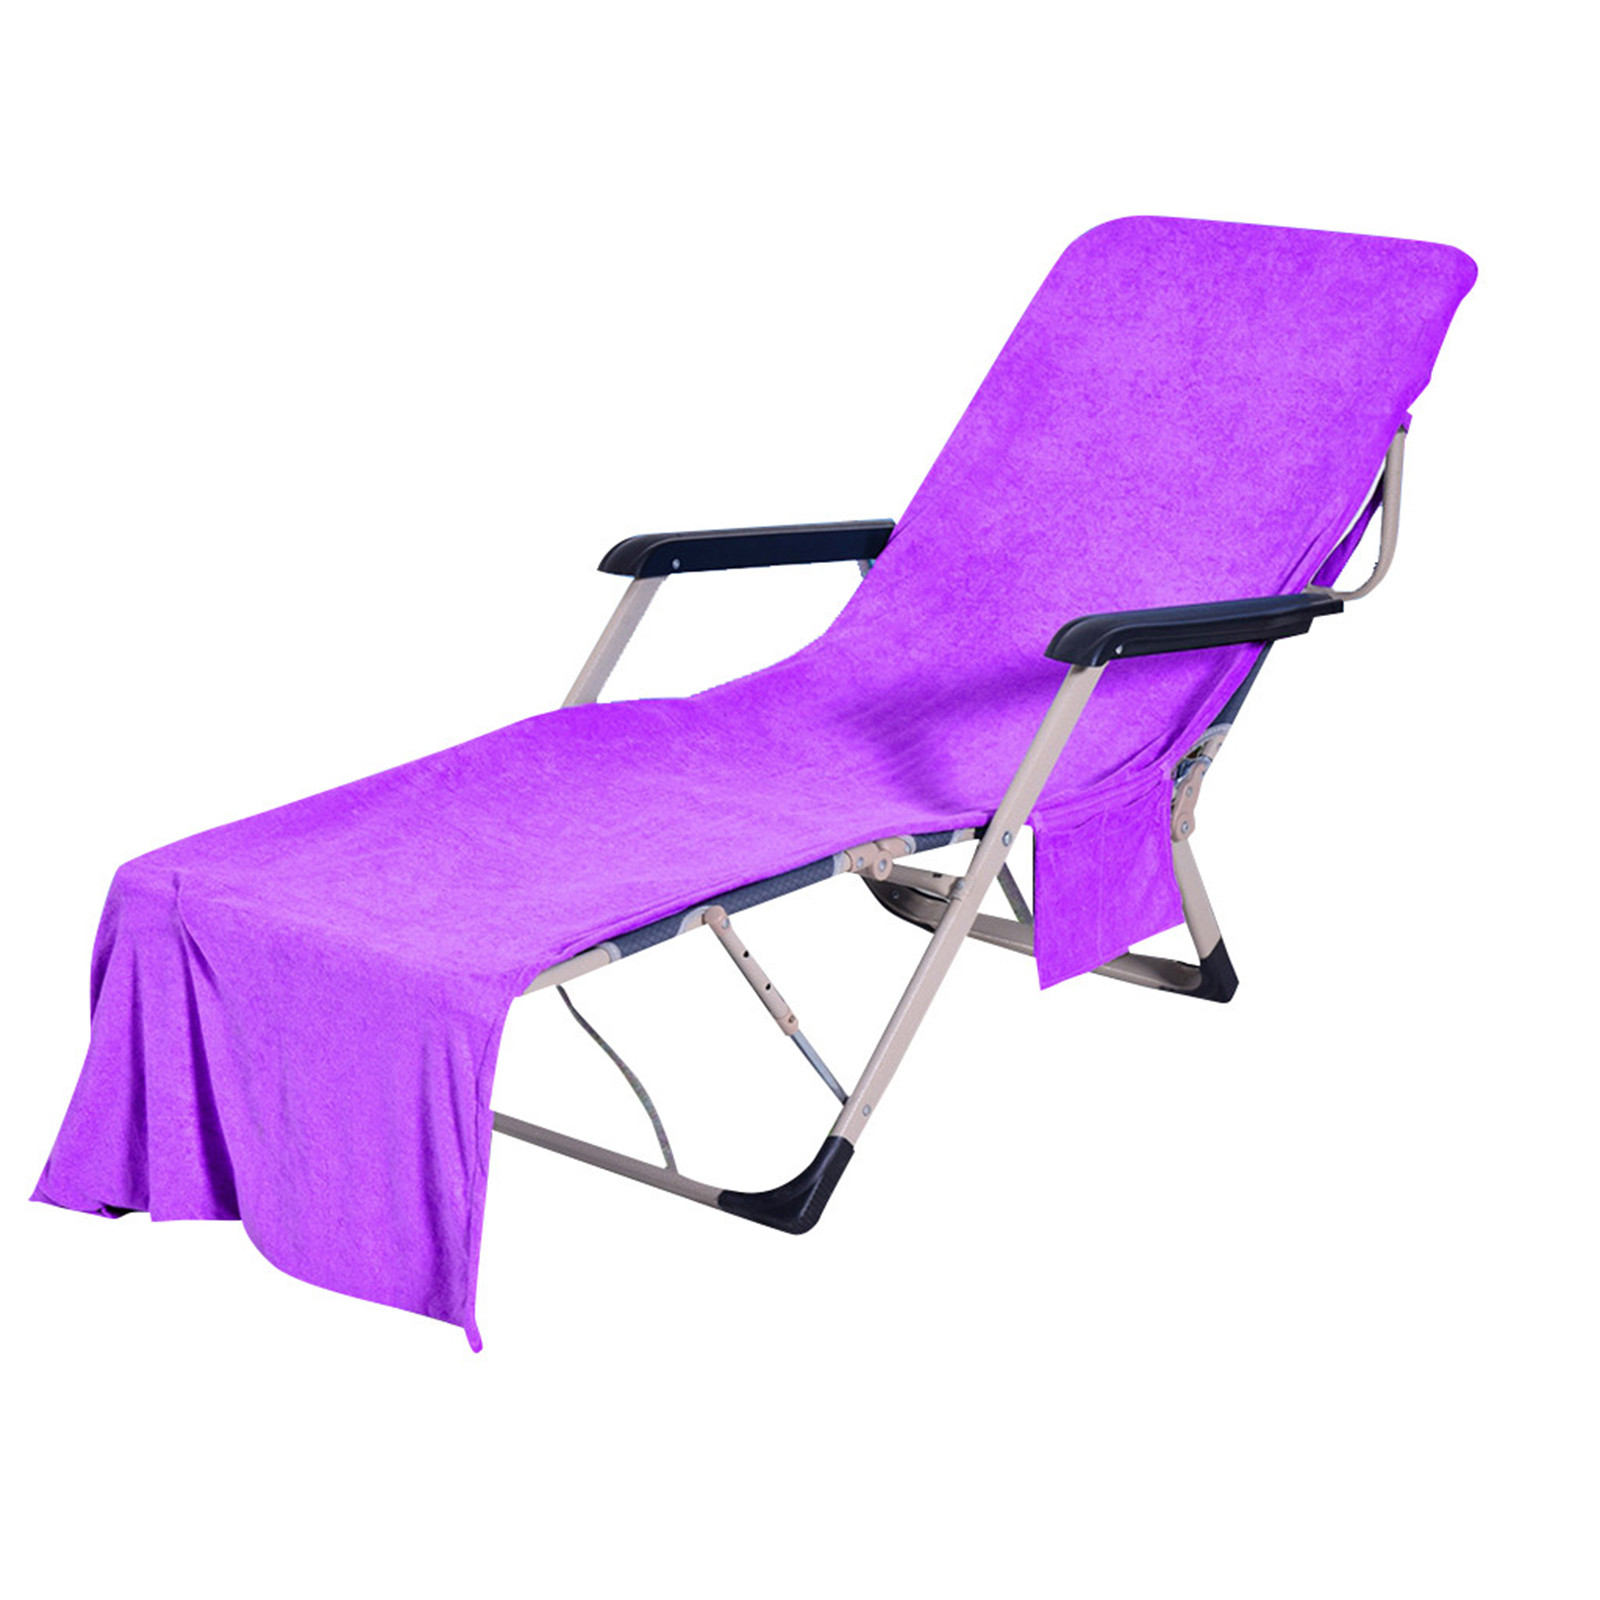 Wovilon Chair Beach Towel Lounge Chair Beach Towel Cover Microfiber Pool Lounge Chair - image 1 of 8